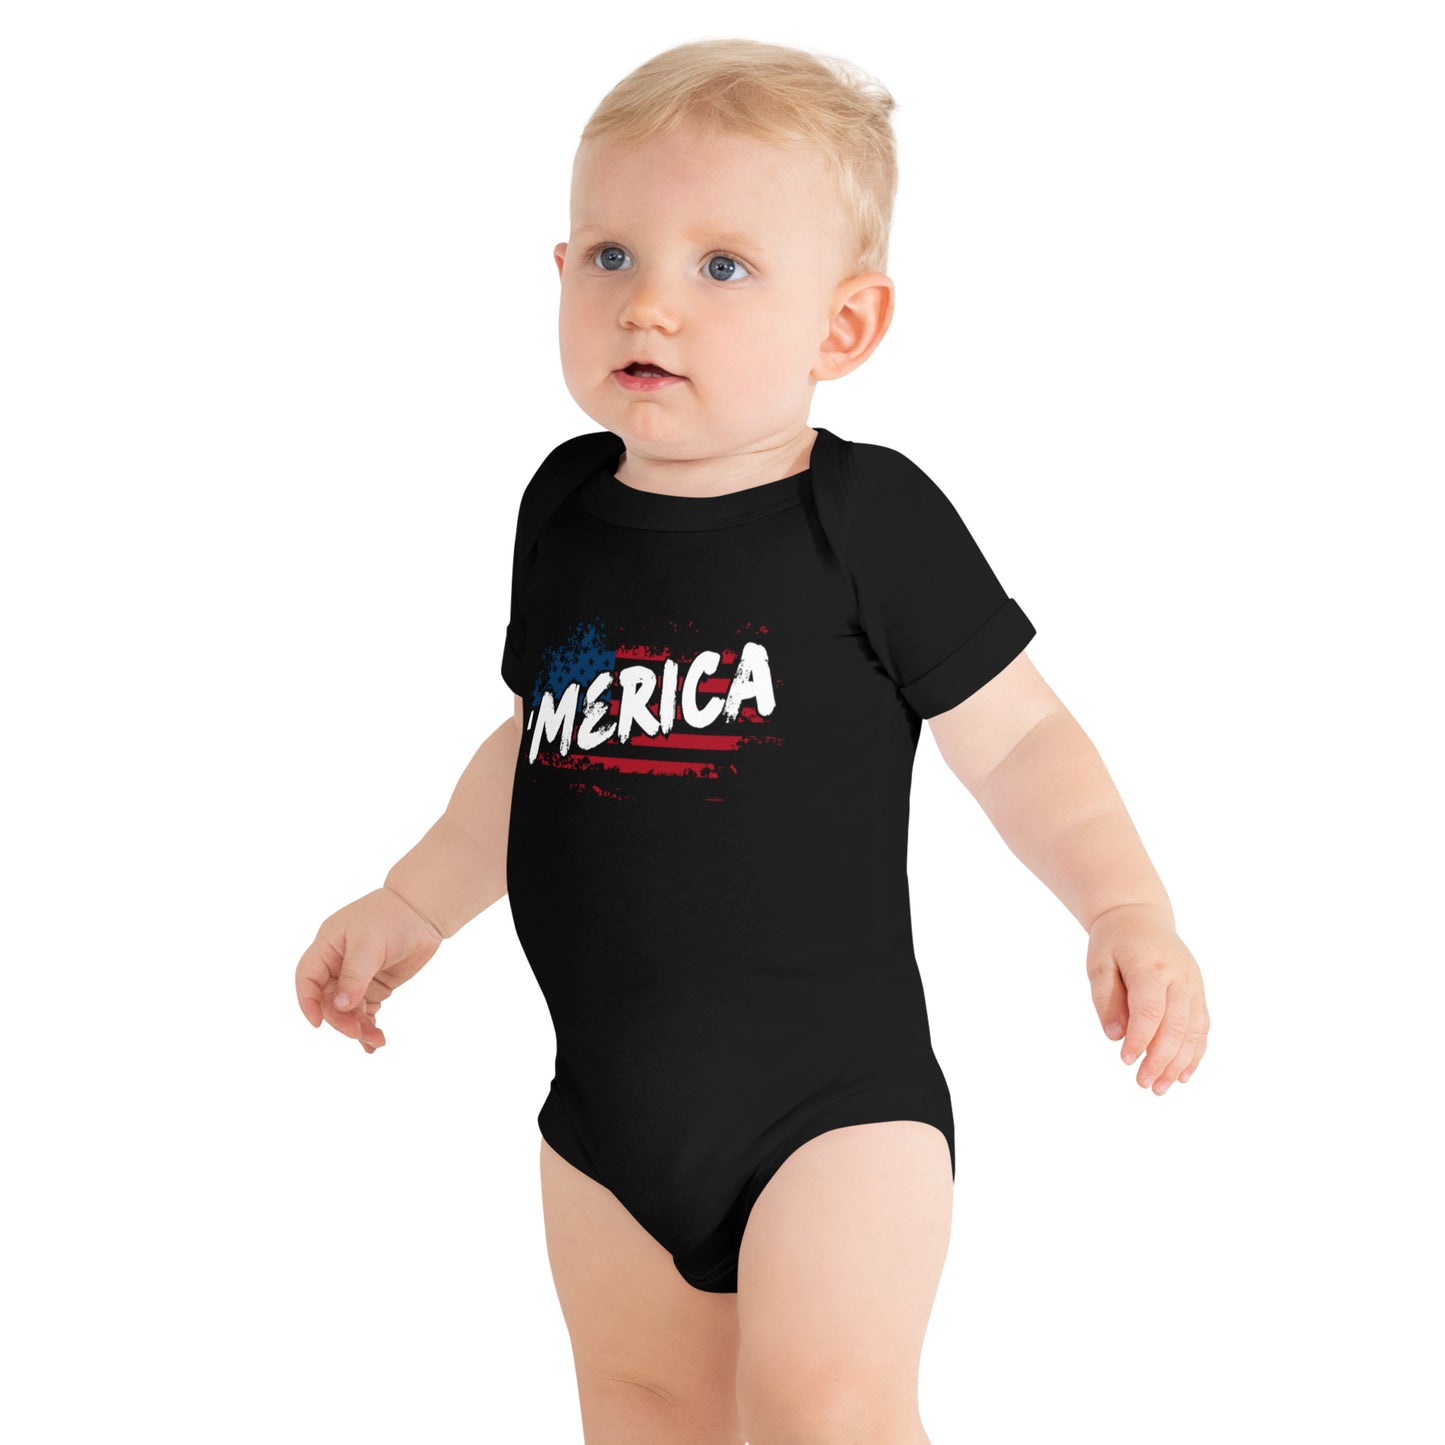 'Merica Baby Edition